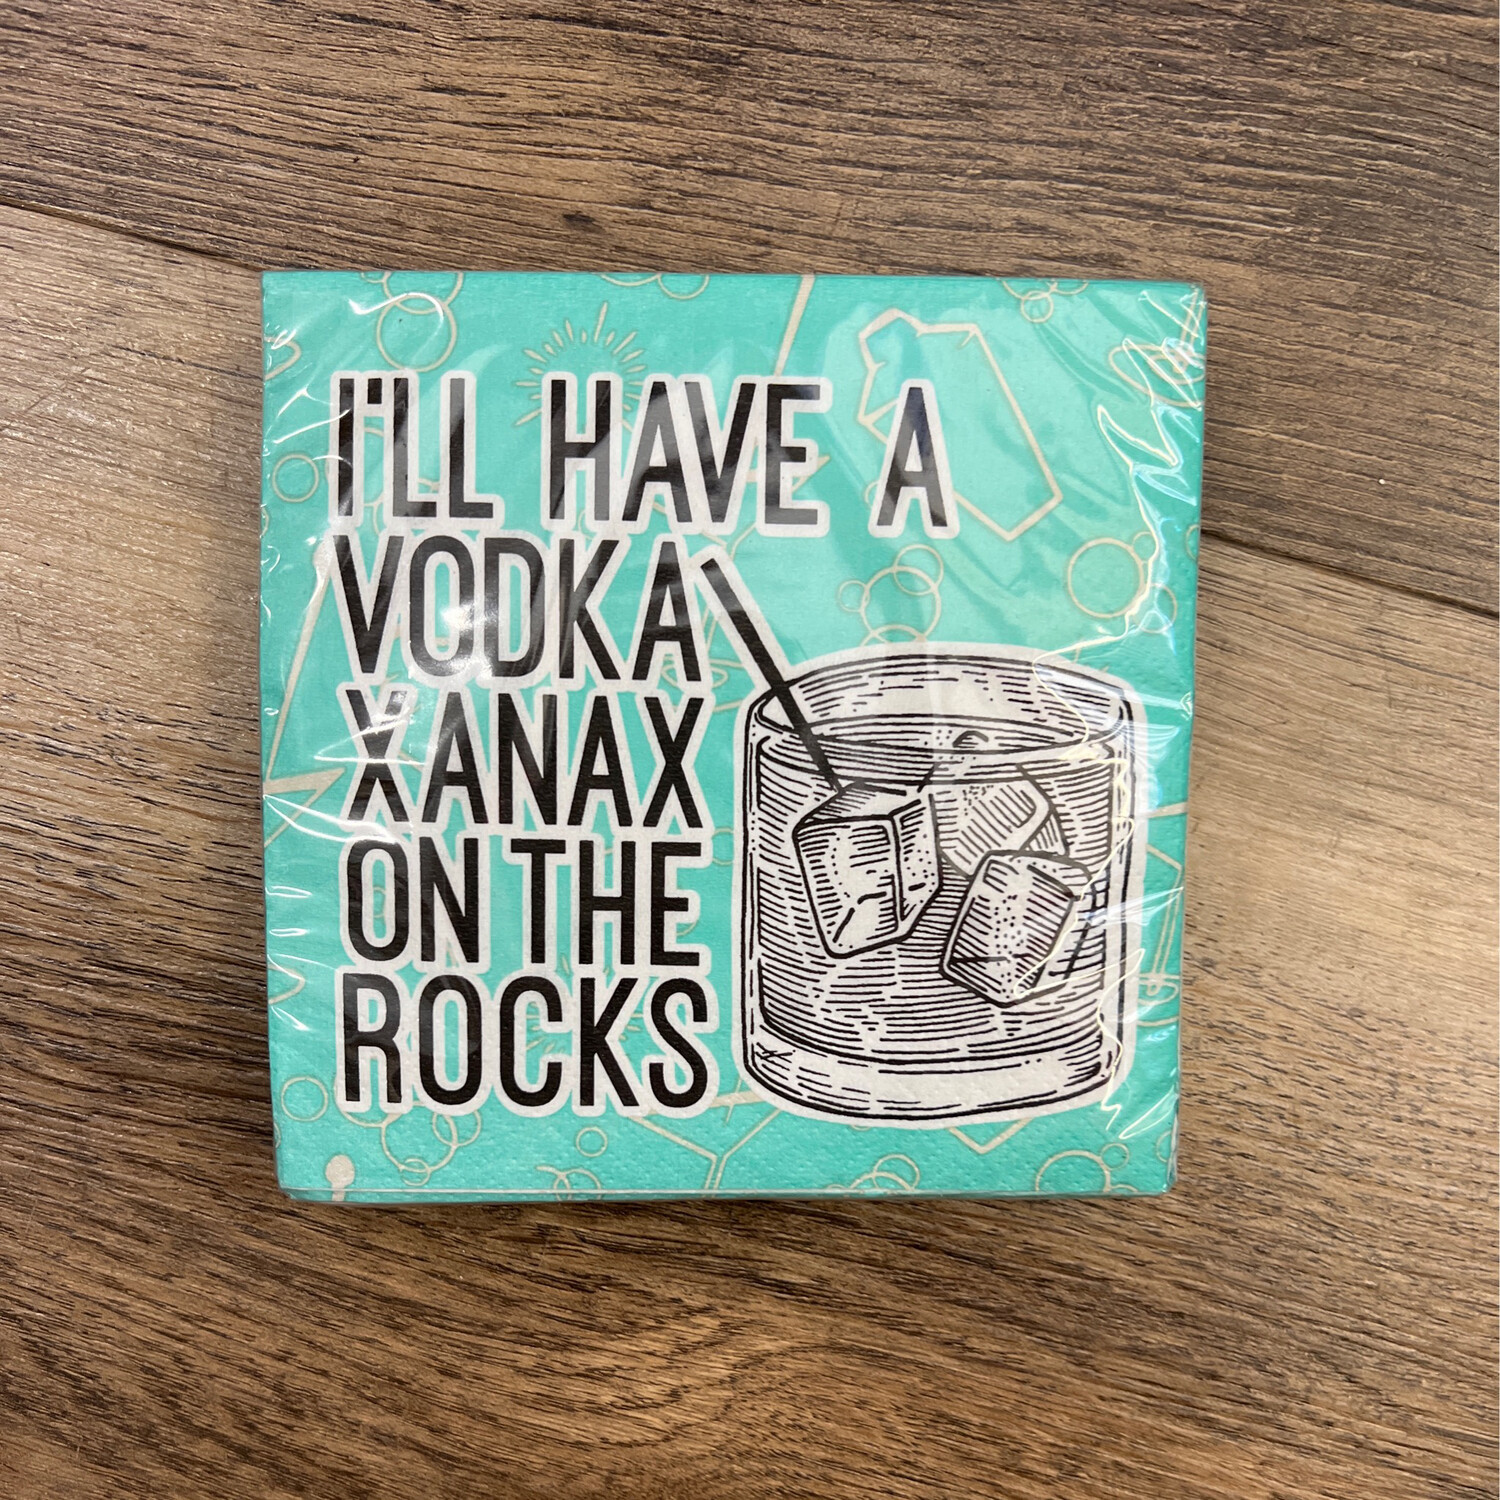 Vodka Xanax On The Rocks